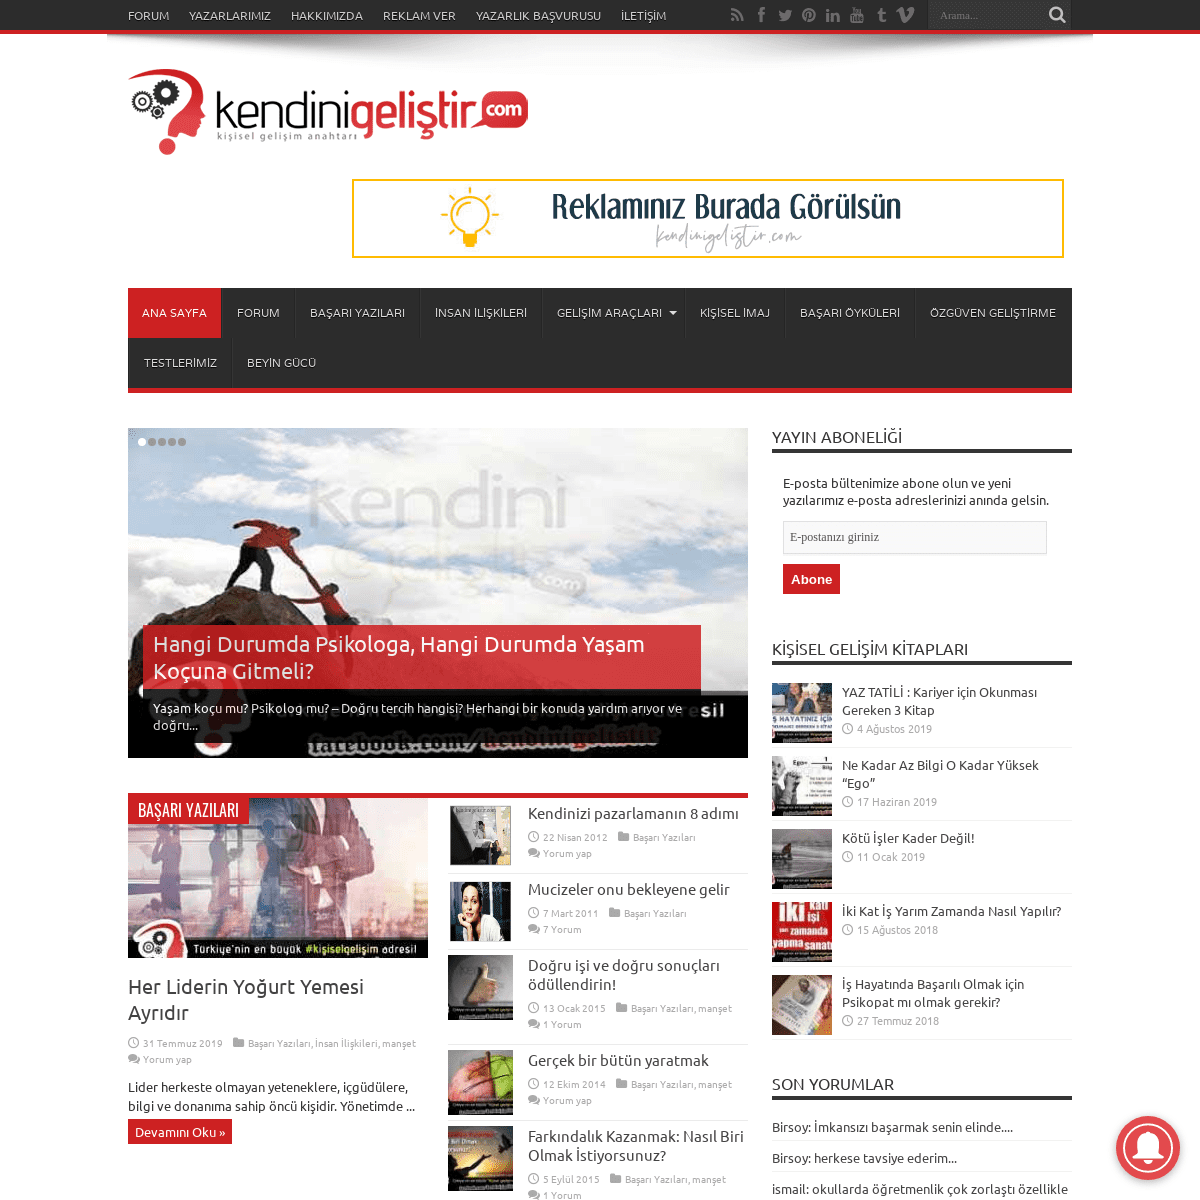 A complete backup of kendinigelistir.com